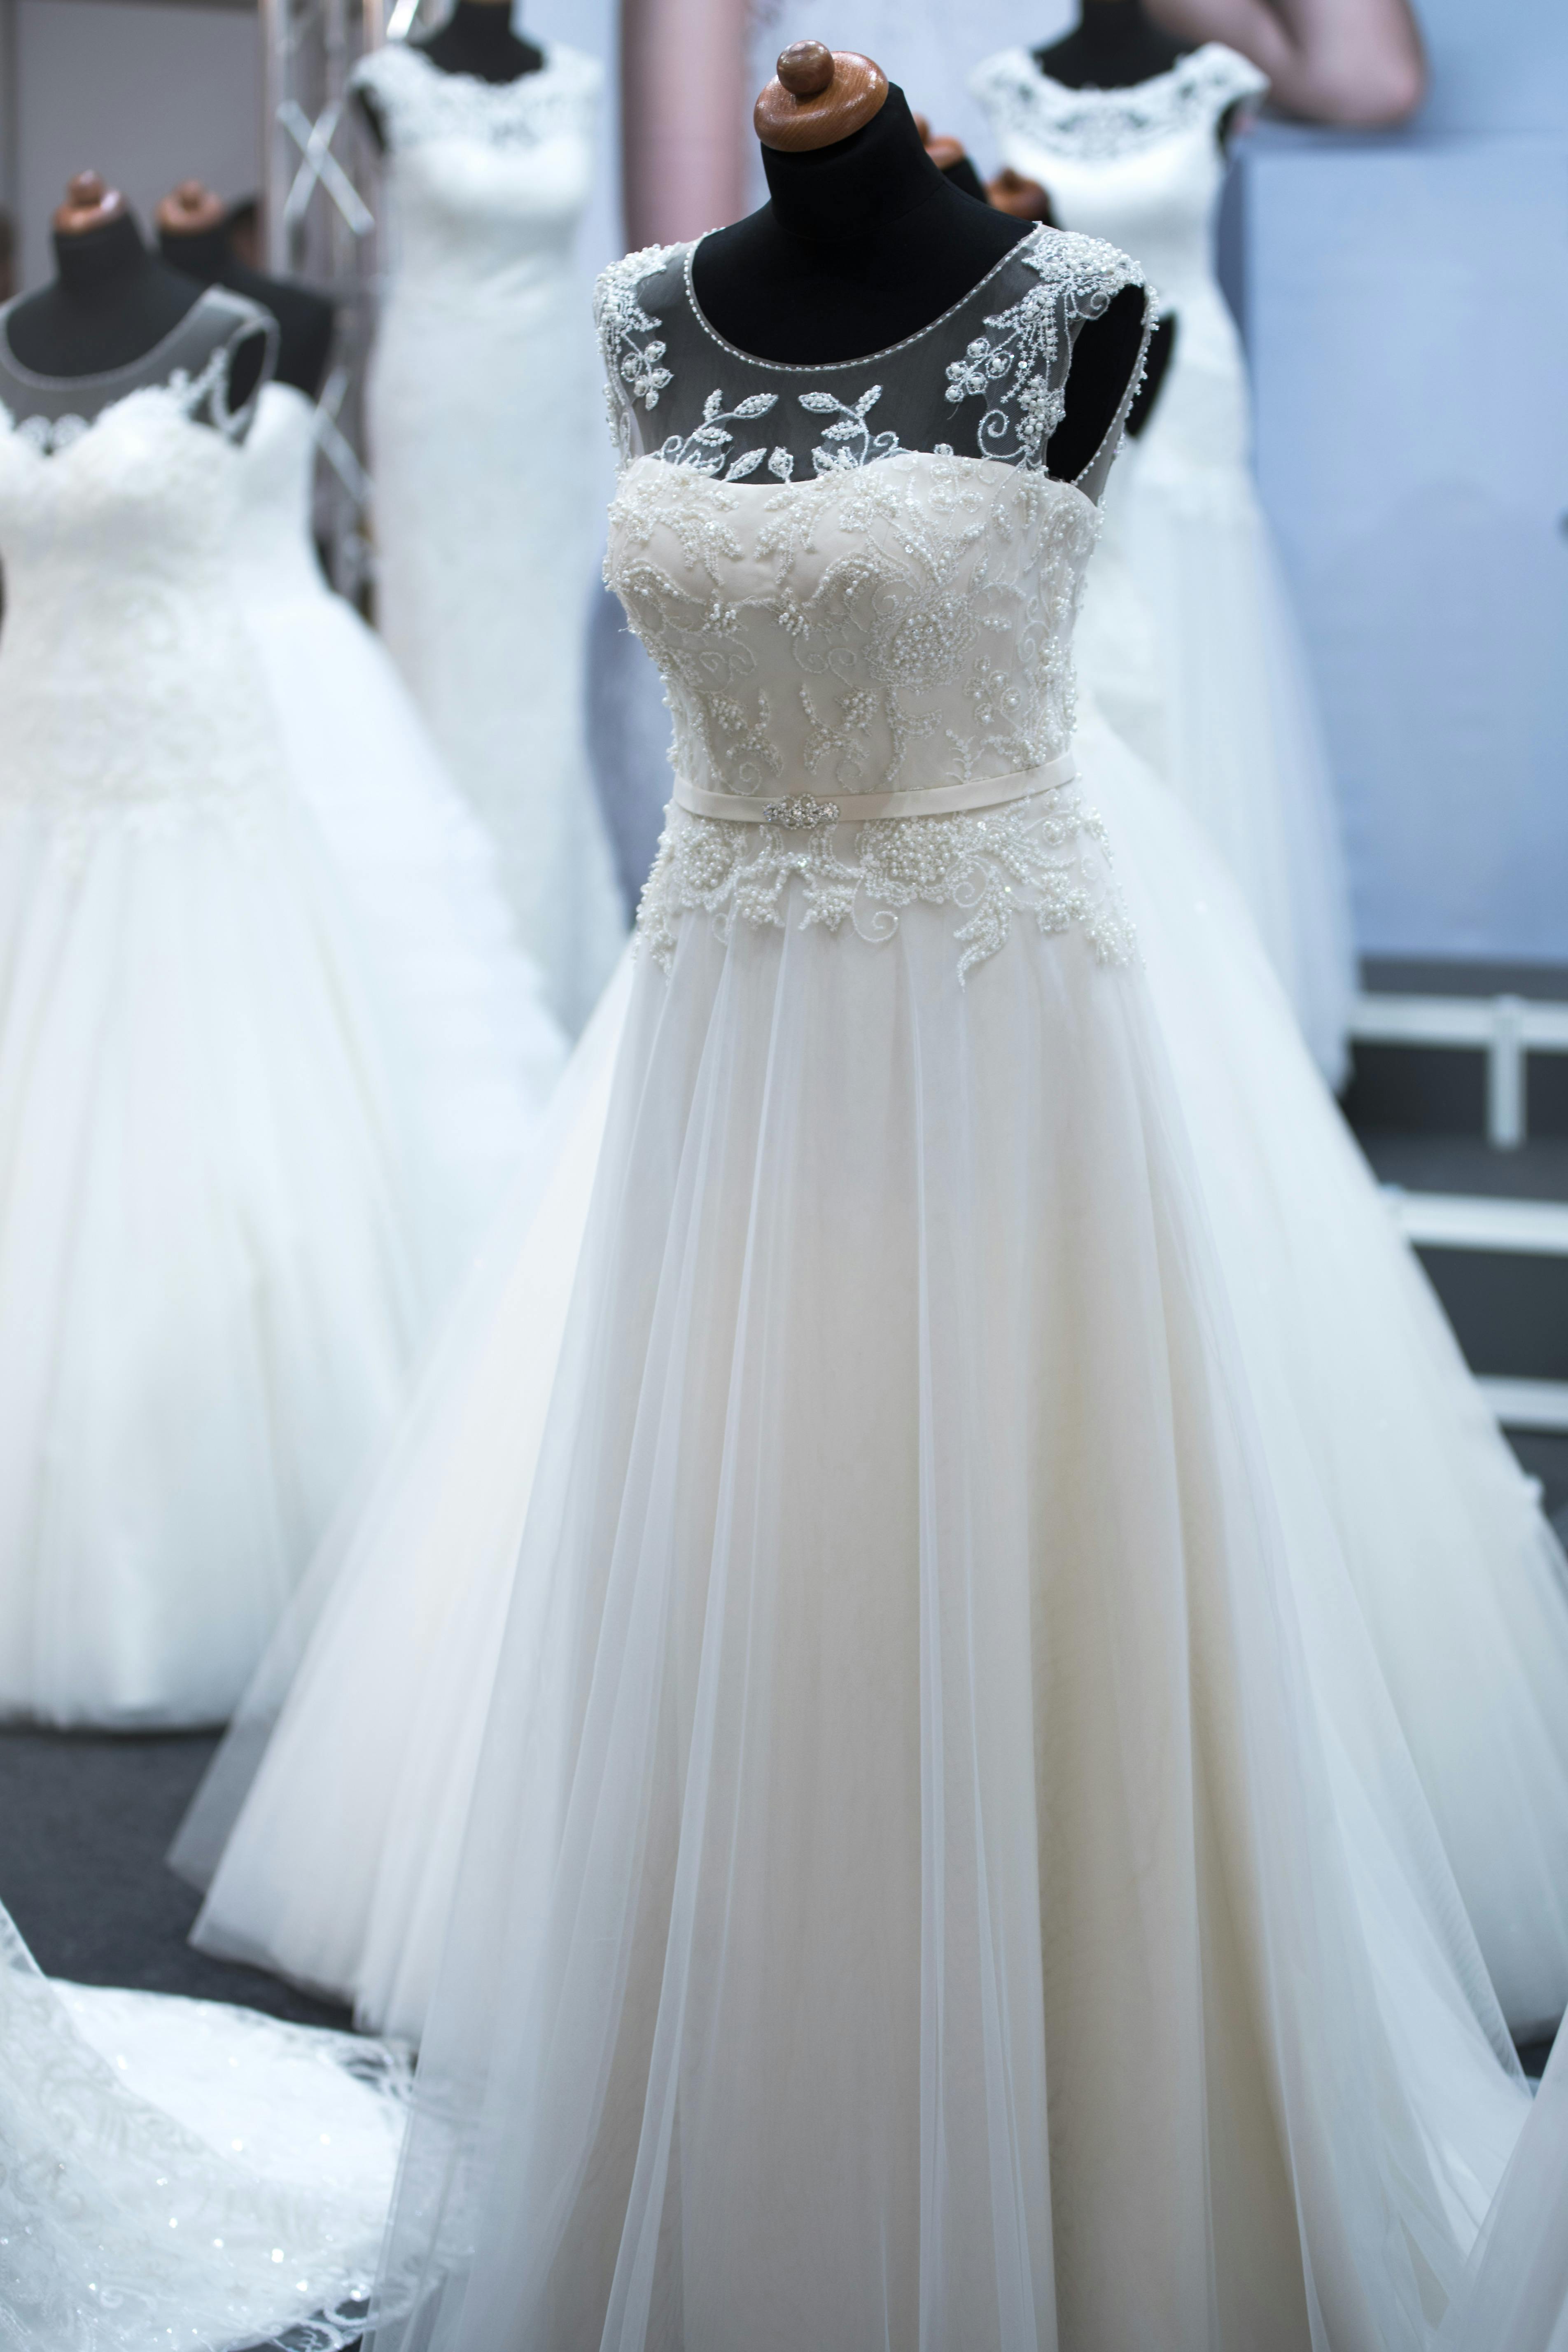 Different wedding dresses on display | Source: Pexels